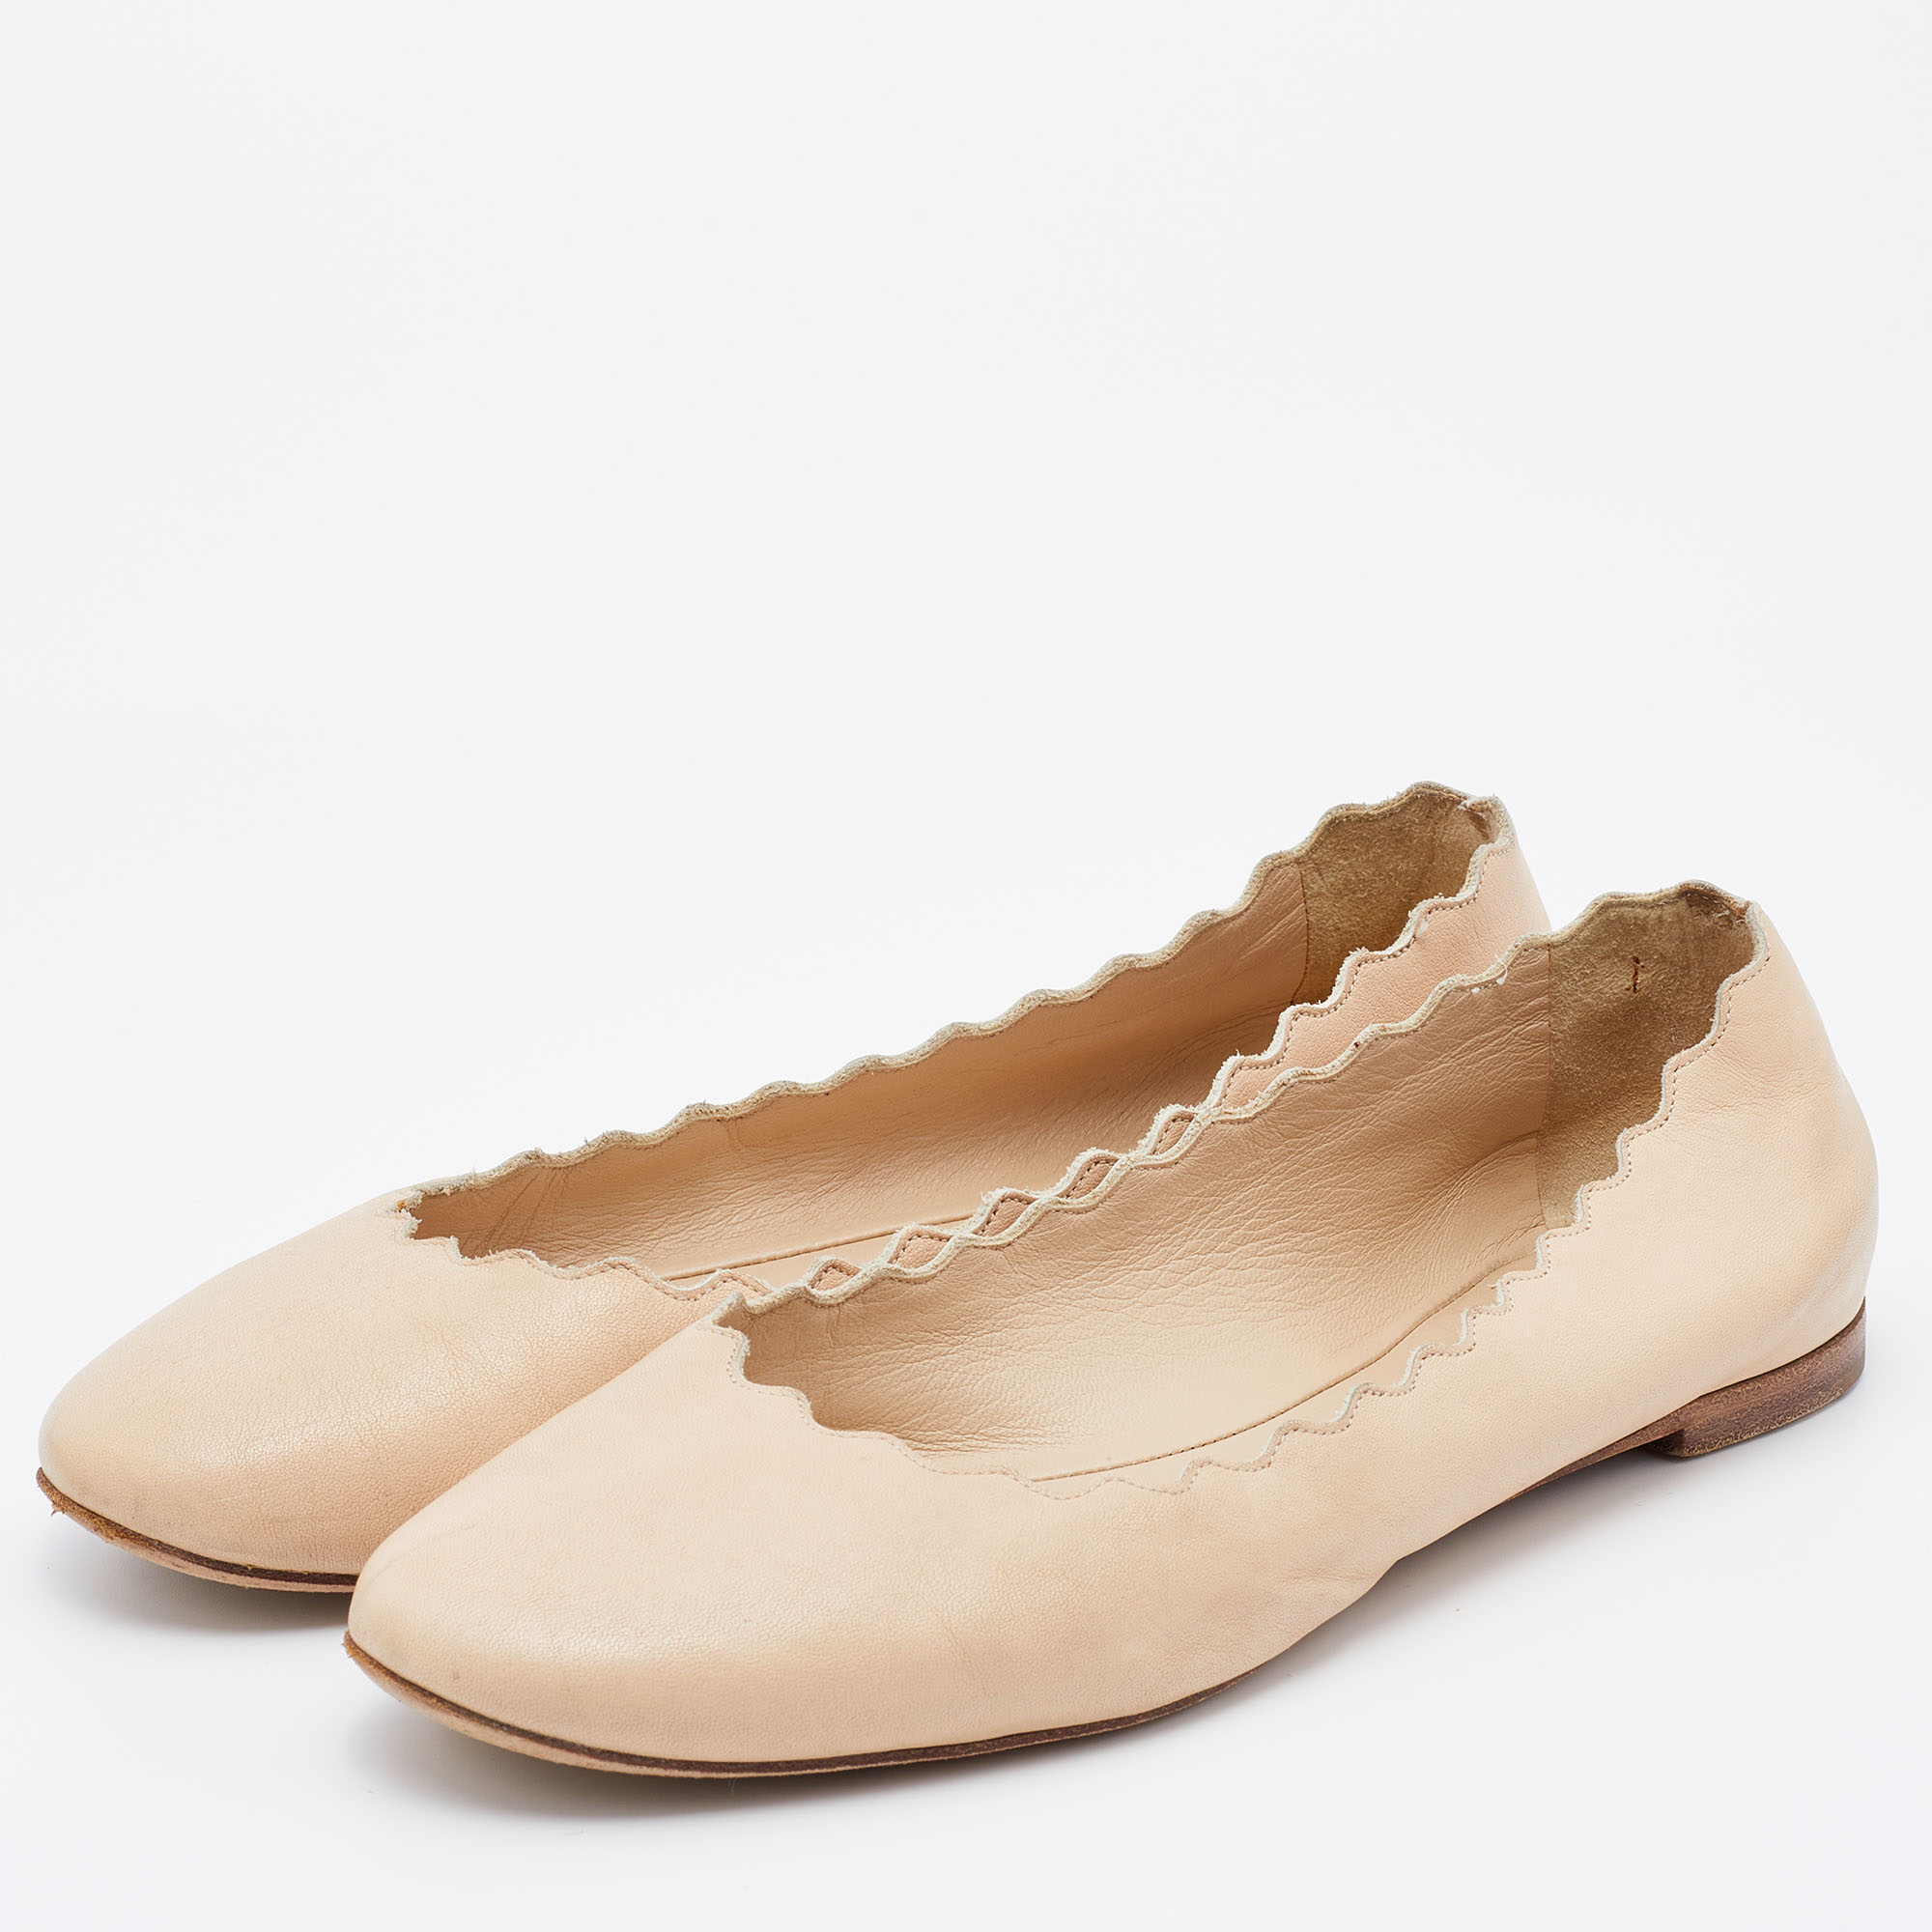 

Chloe Beige Leather Lauren Scalloped Ballet Flats Size